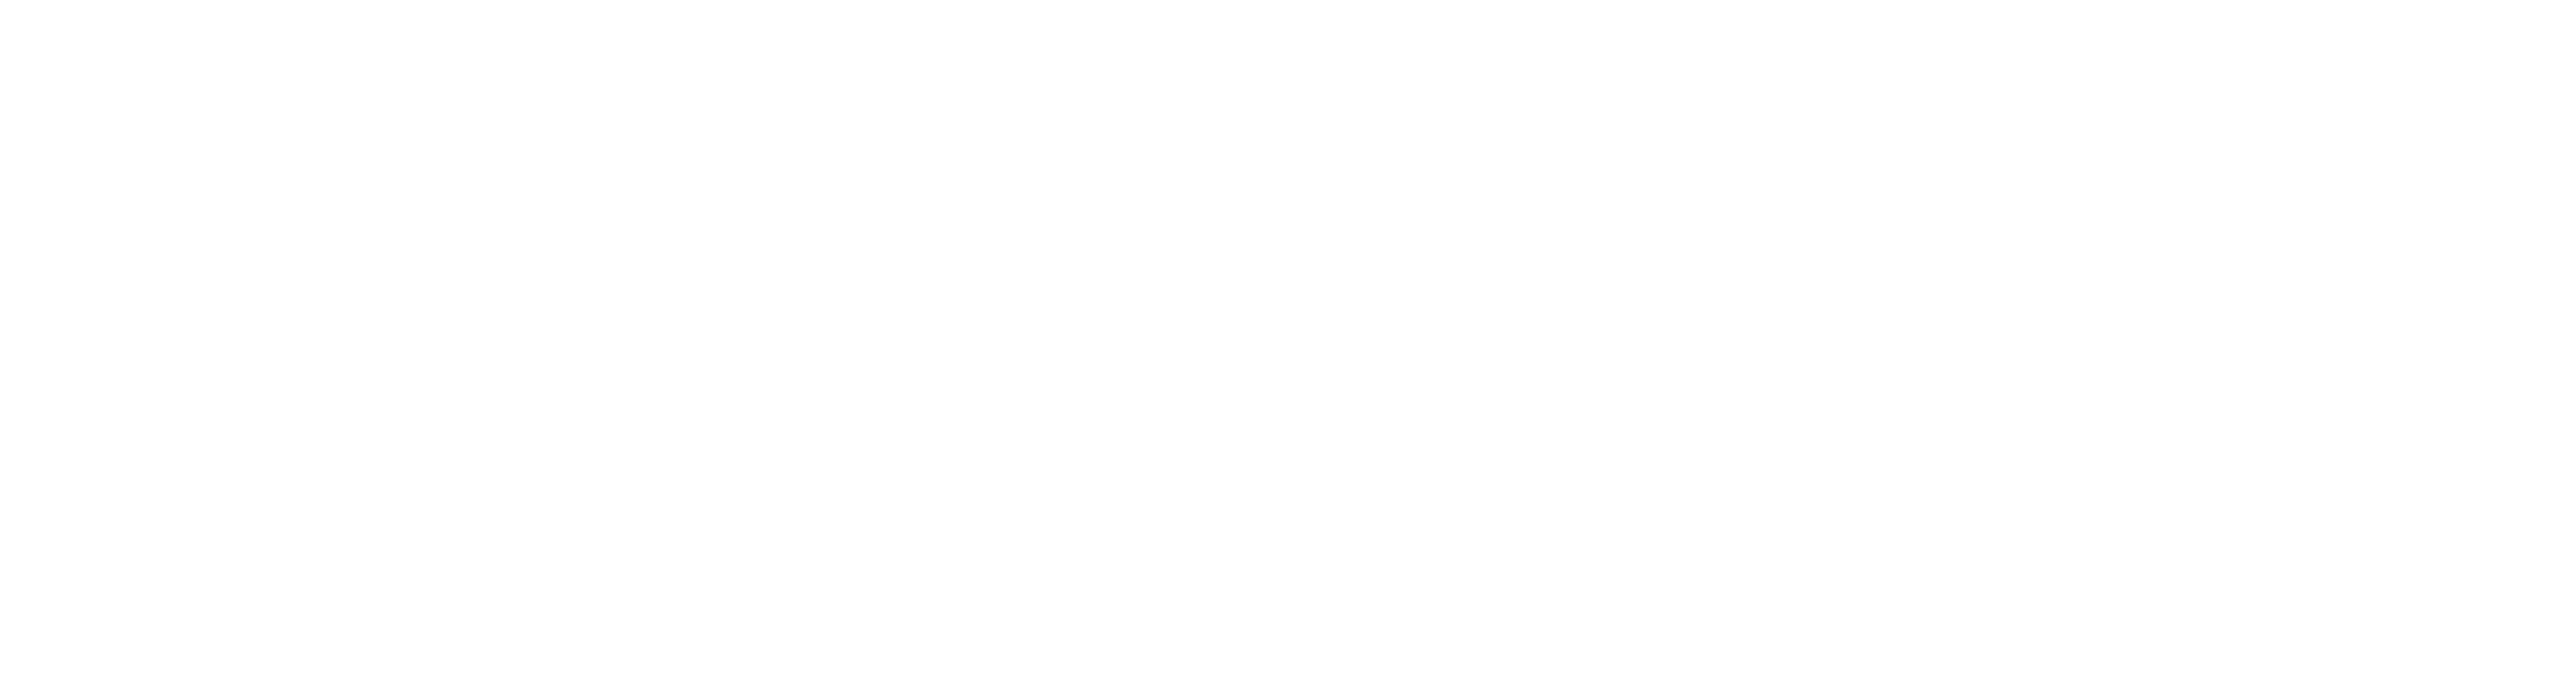 Sjakk Matt Restaurant & Bar